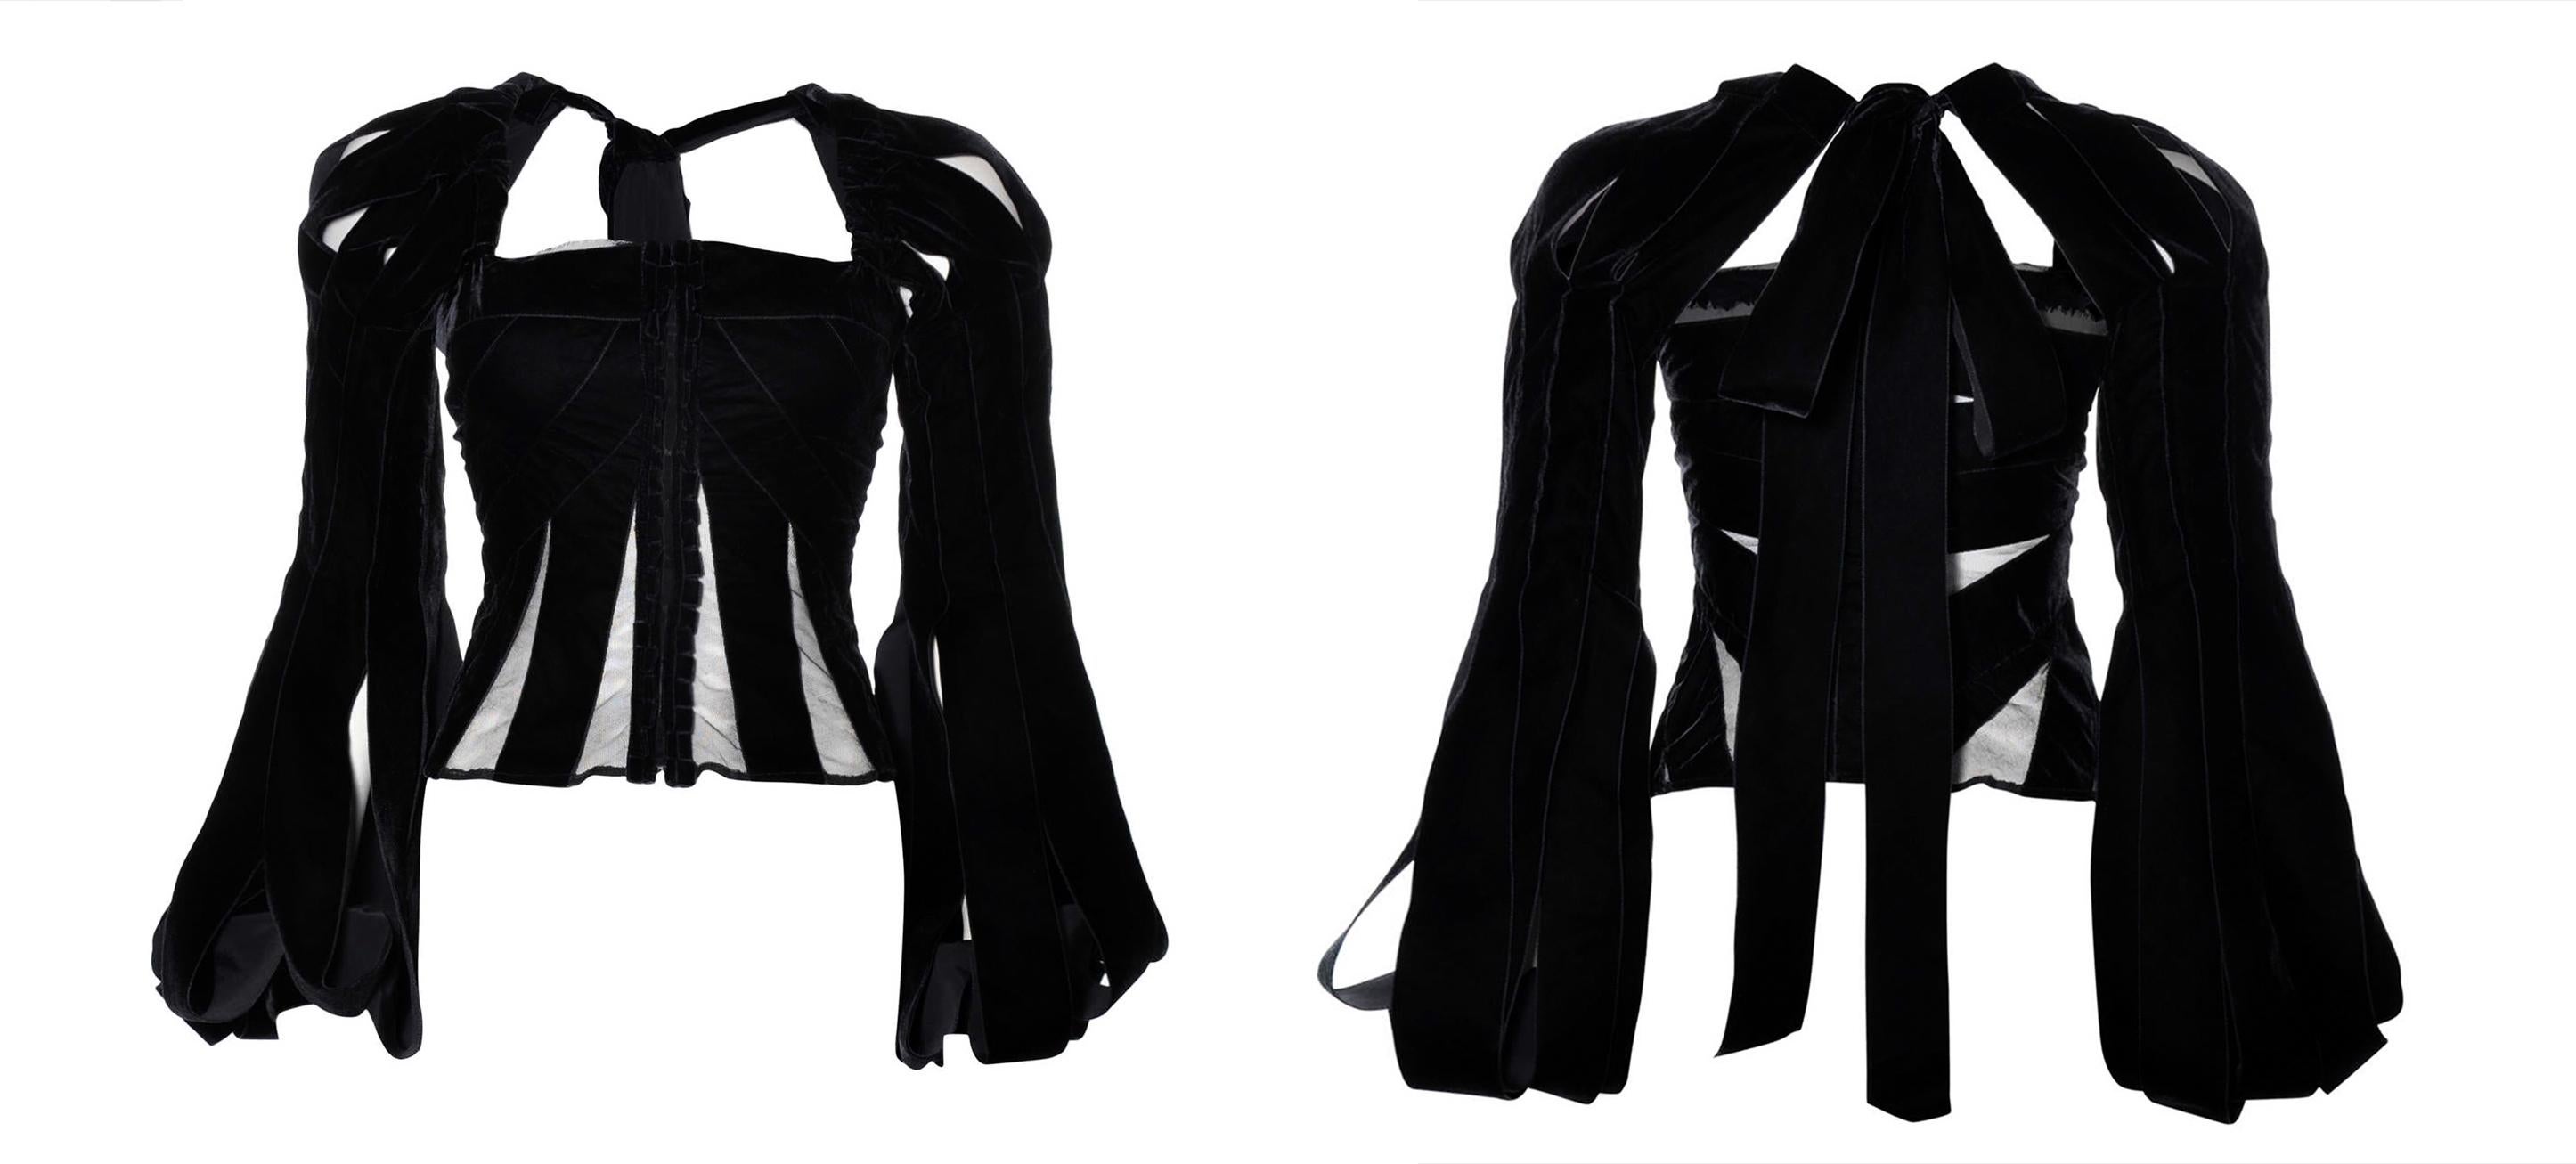 Women's Iconic Tom Ford for Yves Saint Laurent FW2002 Runway Silk Black Corset and Skirt For Sale